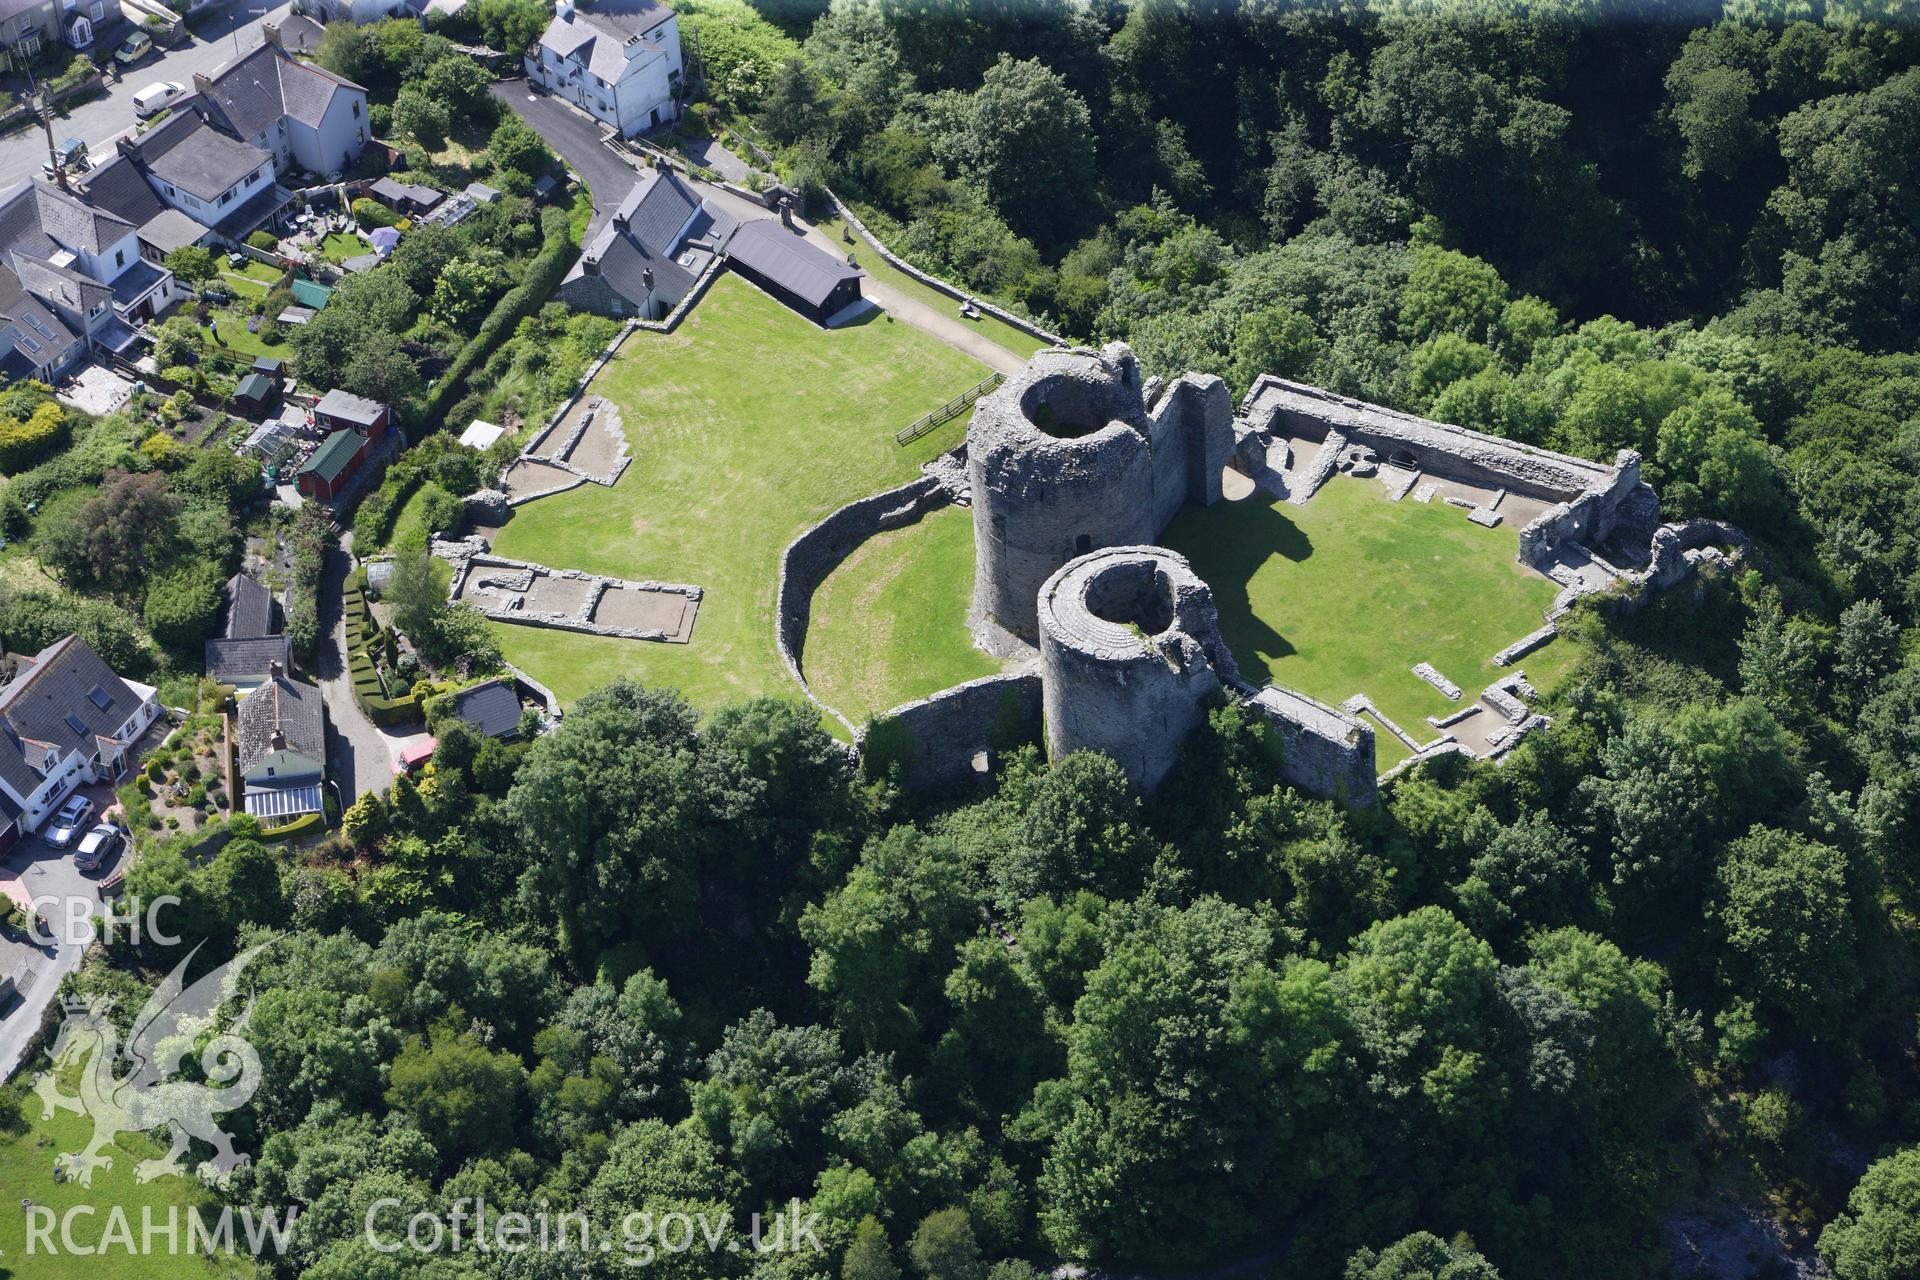 RCAHMW colour oblique aerial photograph of Cilgerran Castle. Taken on 16 June 2009 by Toby Driver